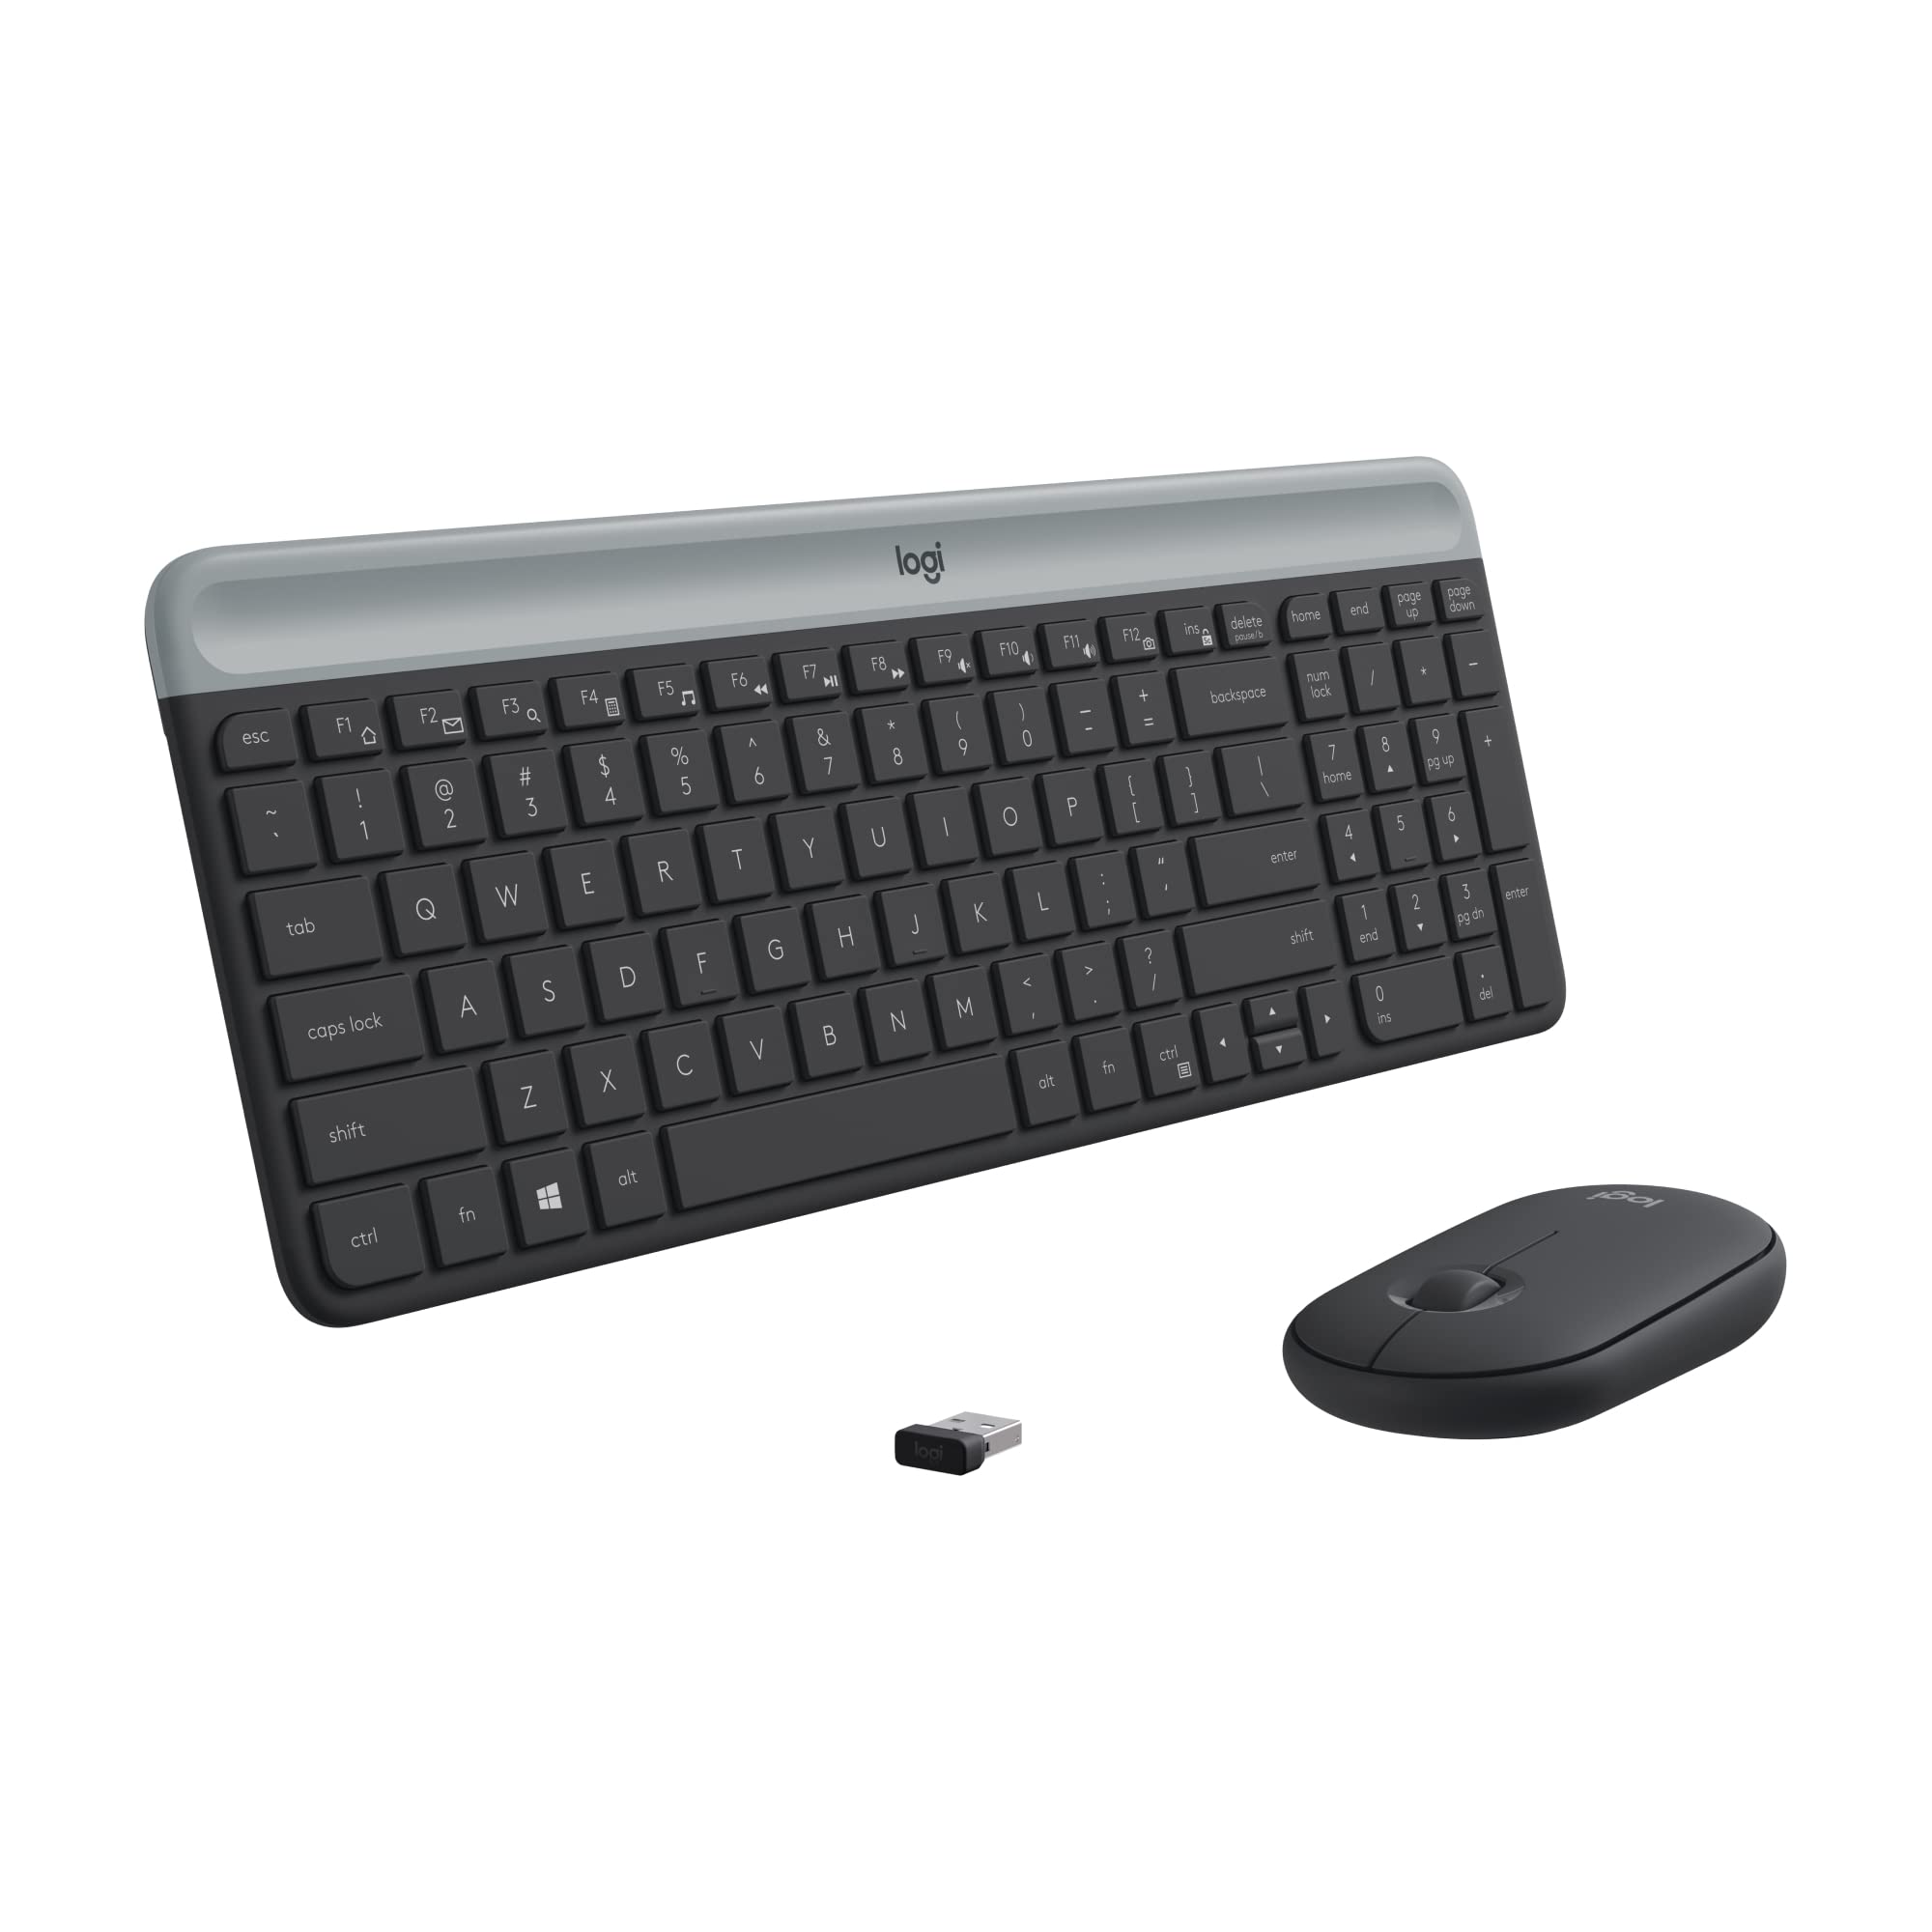 Logitech MK470 Slim Wireless Keyboard & Mouse Combo (Graphite) $29.88 + Free Shipping